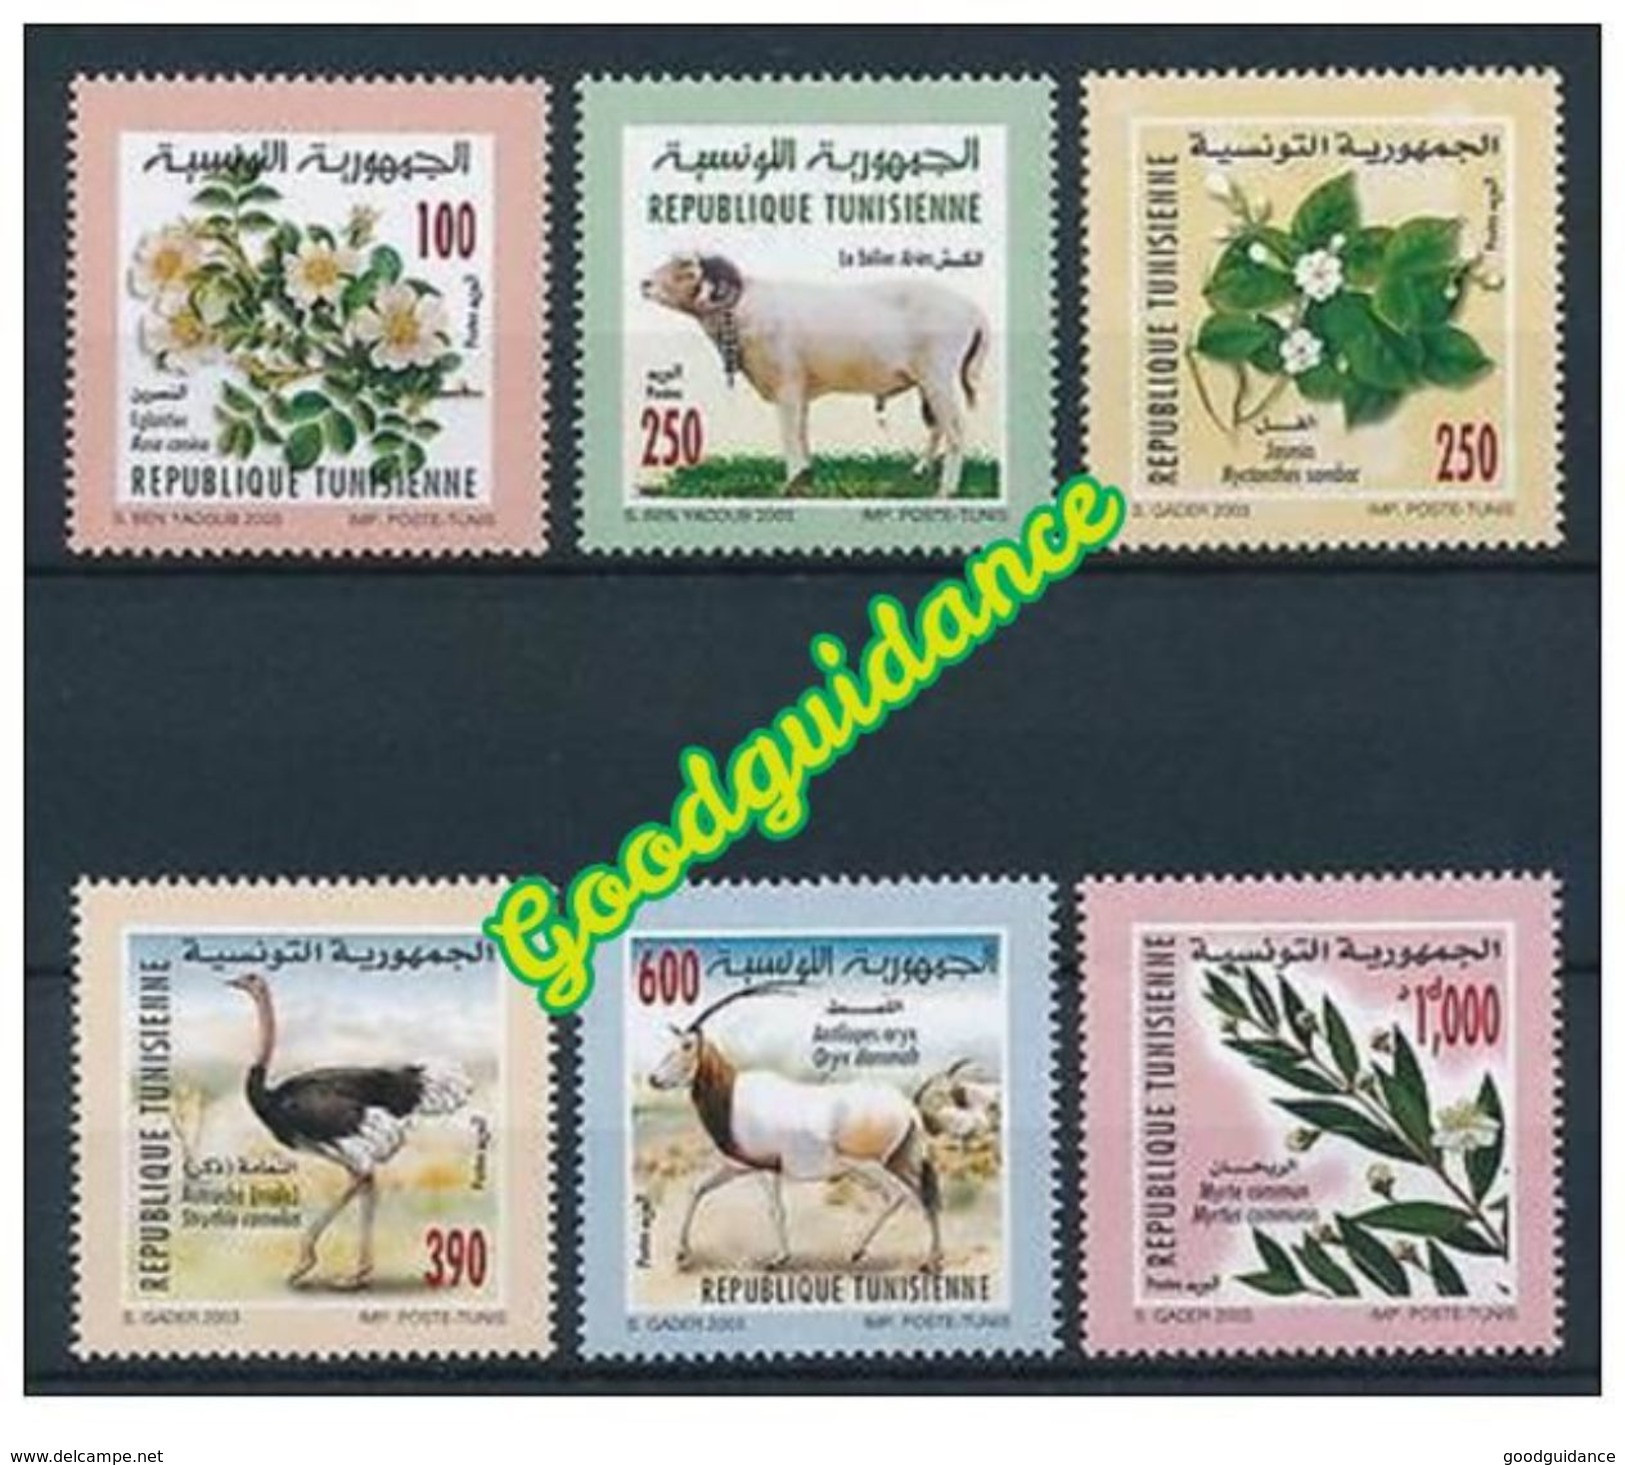 2003- Tunisia- Fauna And Flora: Wild Dog Rose, Jasmine, Ram, Ostrich, Antelope Oryx, Myrtle- Complete Set 3v.MNH** - Tunesien (1956-...)